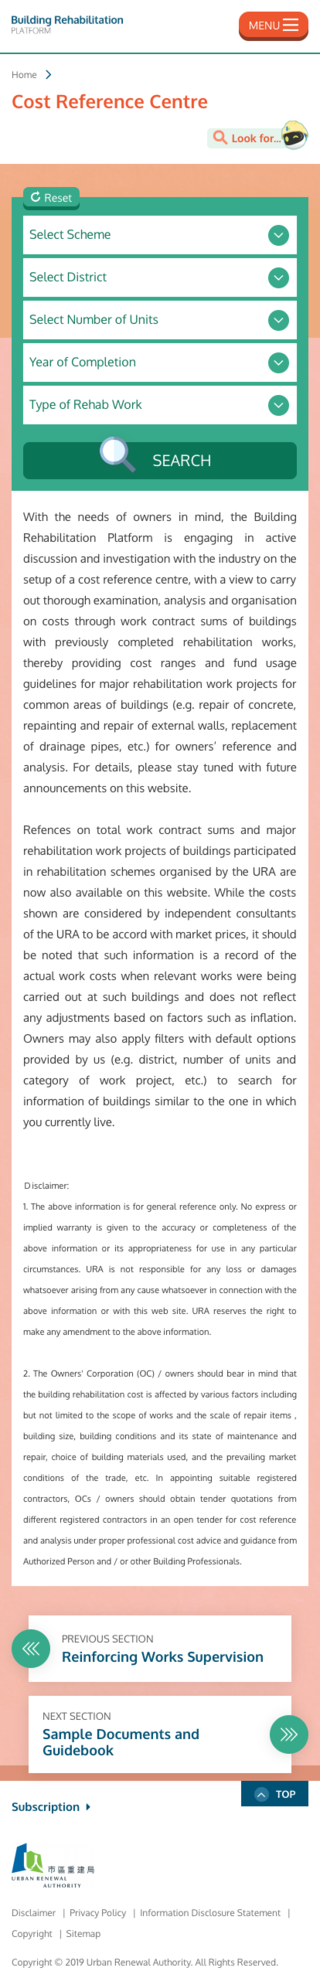 Building Rehabilitation Platform Mobile Cost Reference Centre page